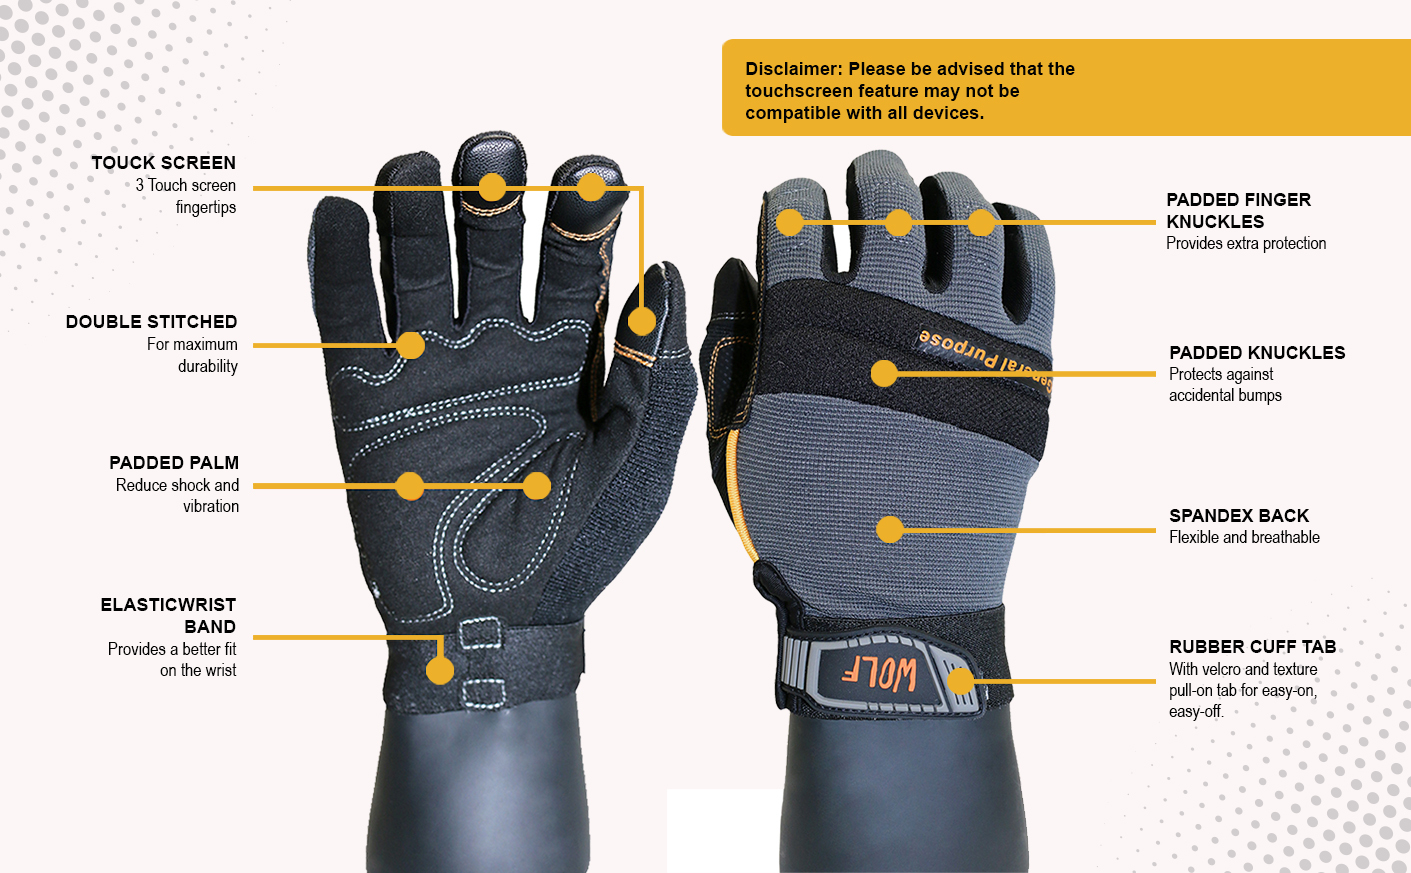 WOLF Mechanic All-purpose Stretchable Flex Grip Work Glove 